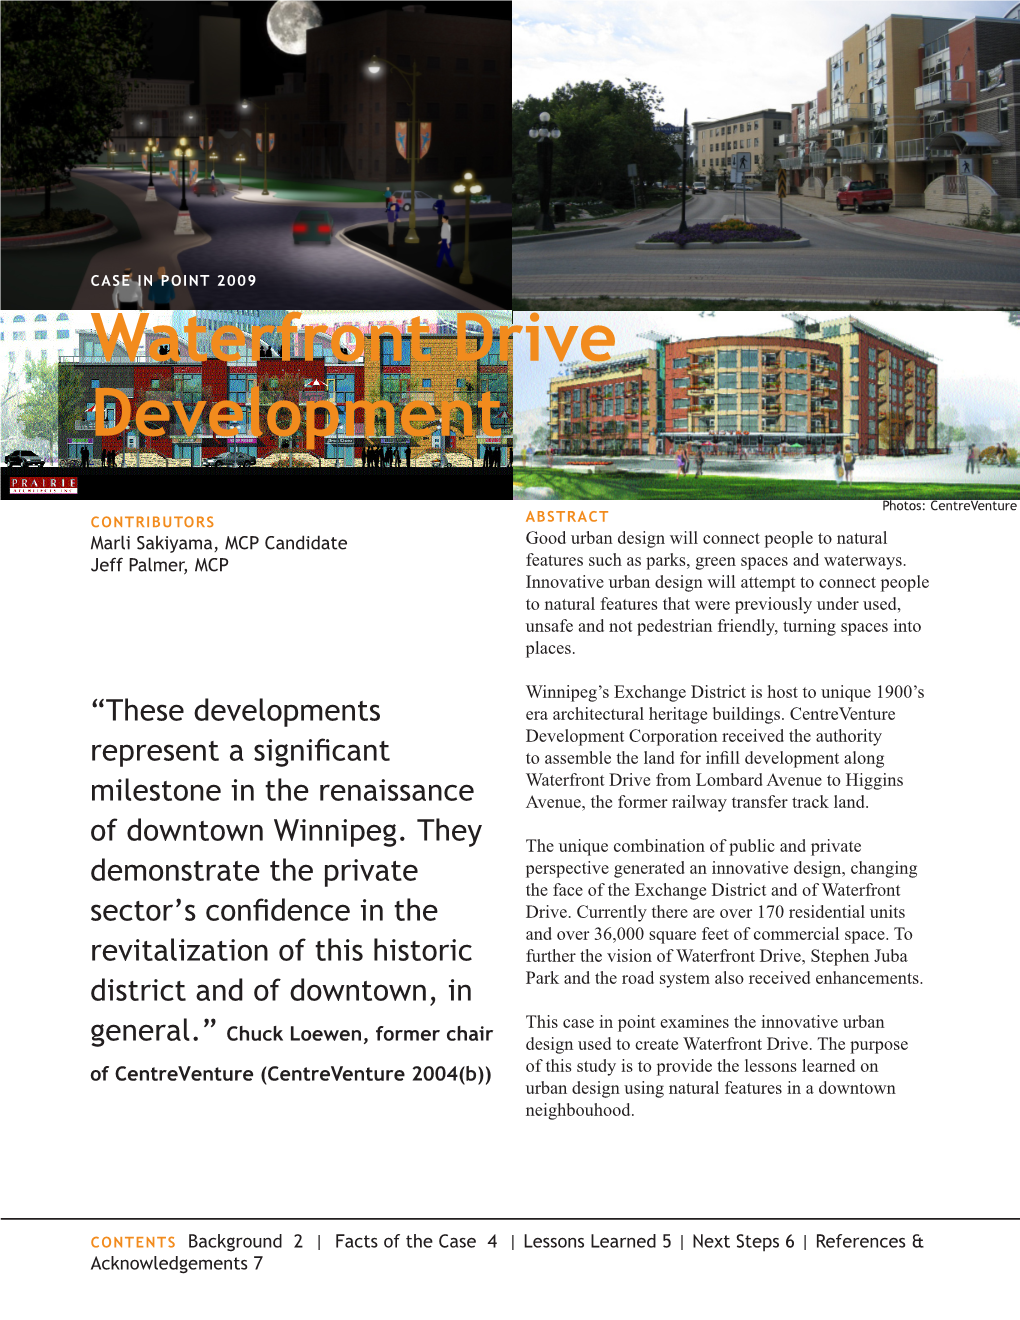 Waterfront Drive Development